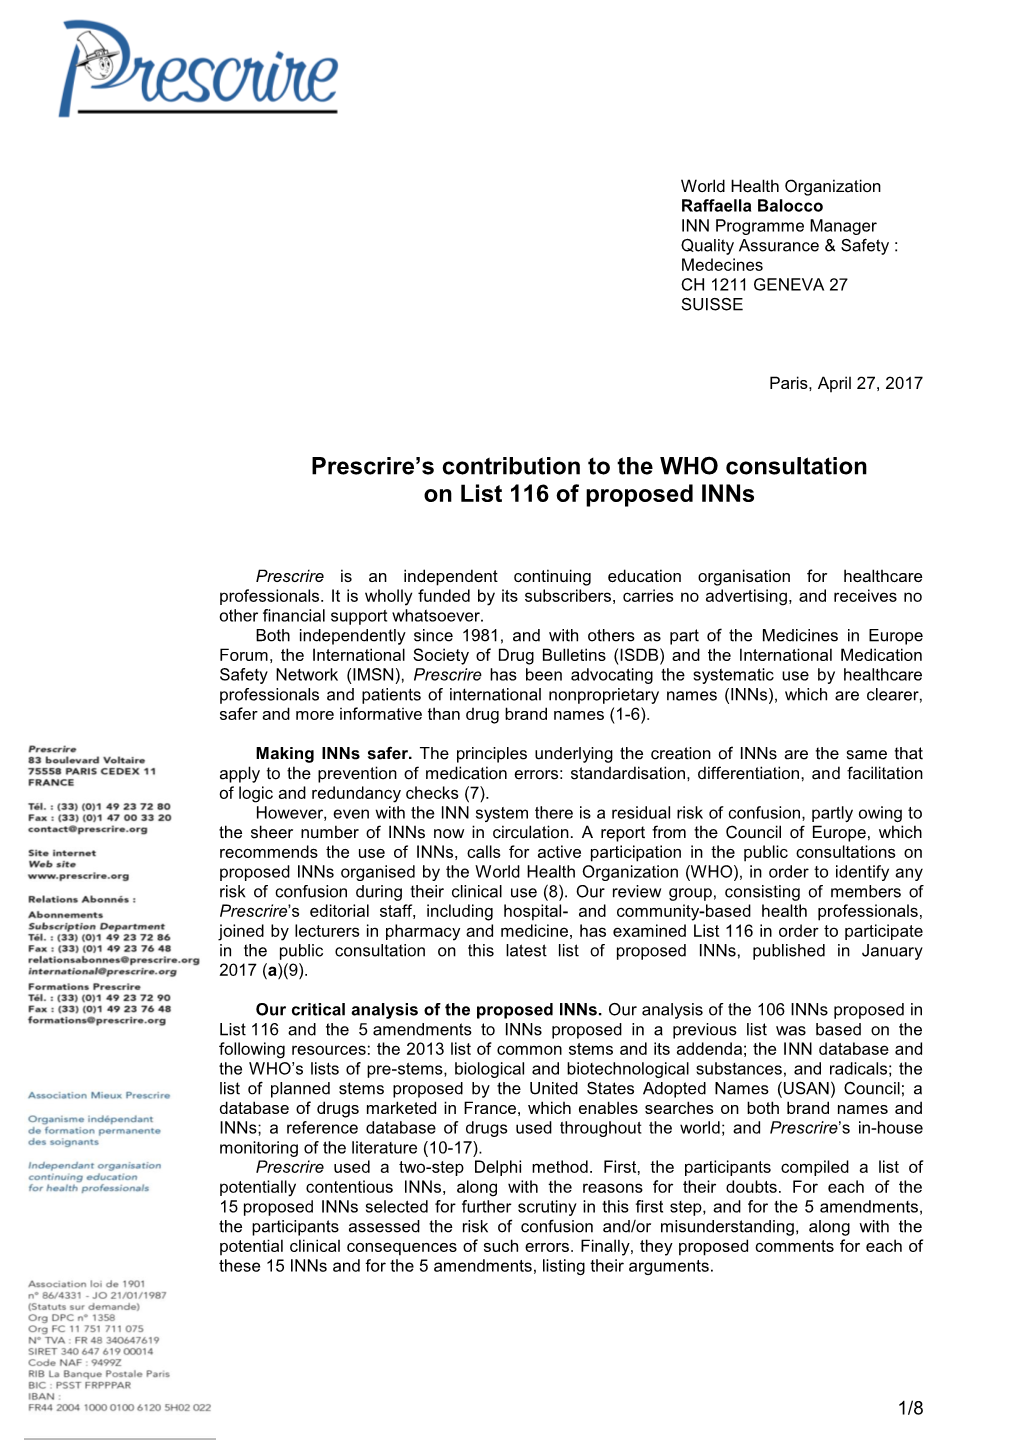 Prescrire's Contribution to OMS Consultation DCI List